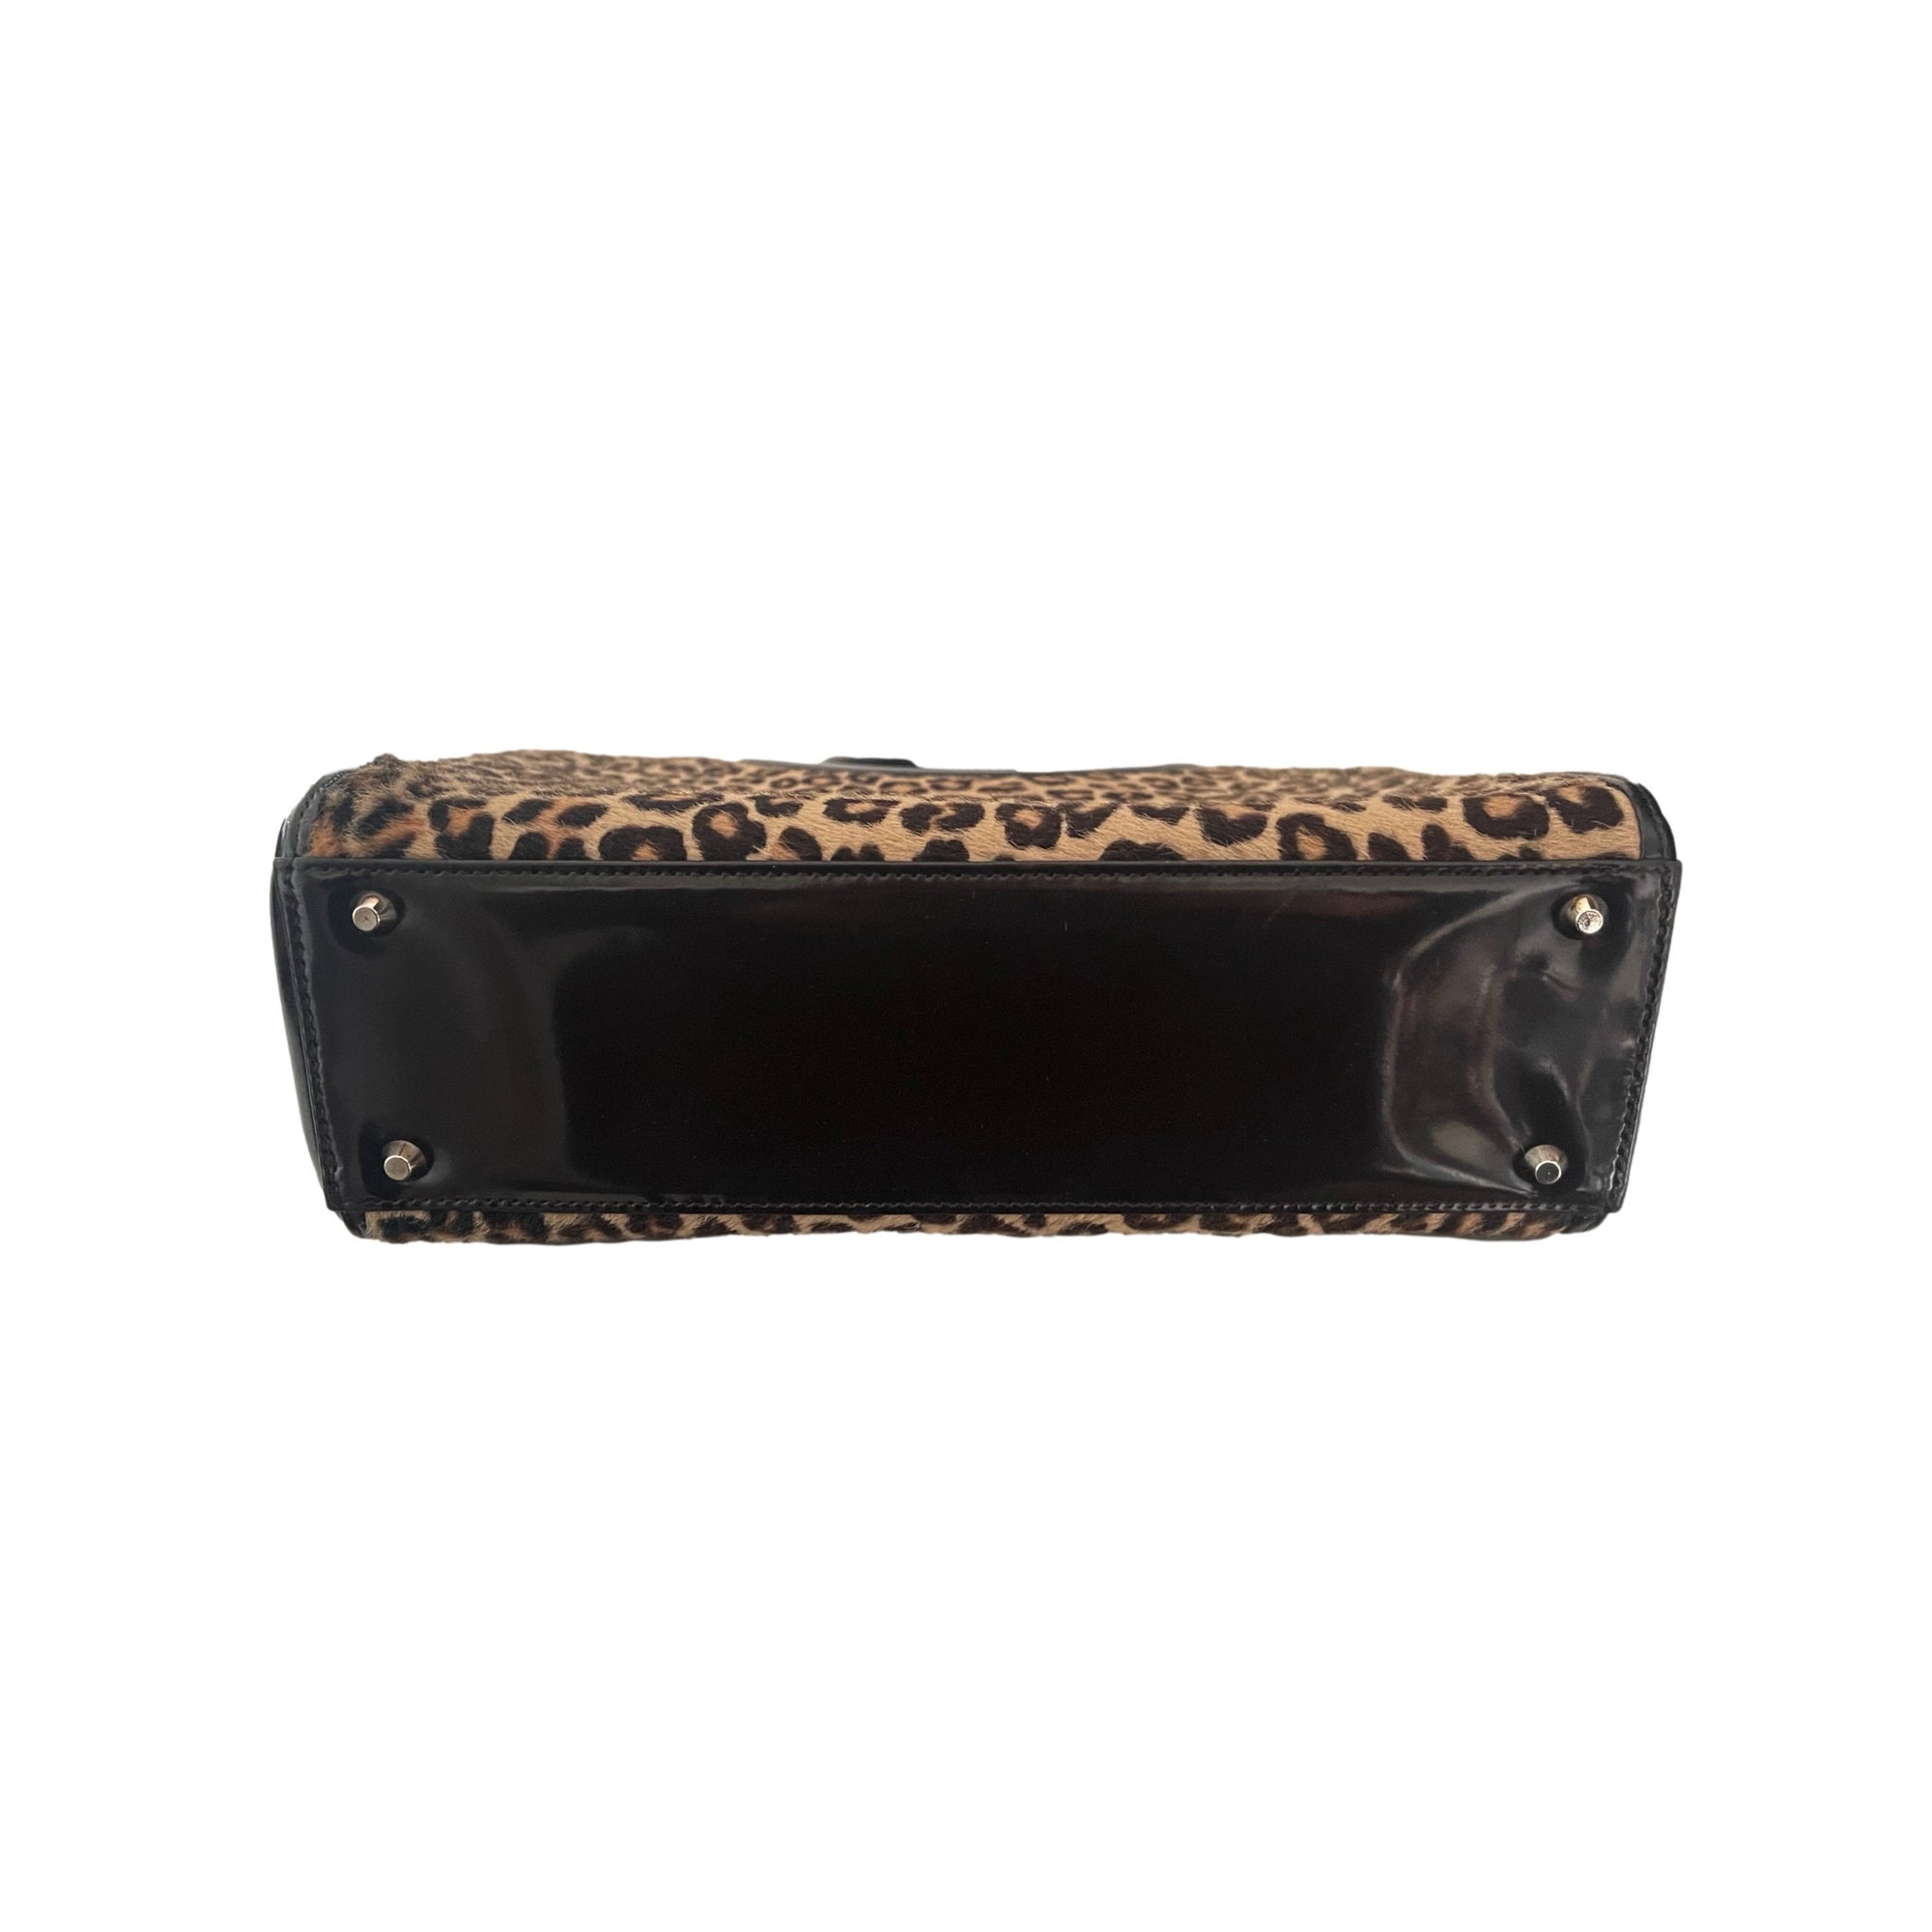 Dior Cheetah Calf Hair Top Handle - Handbags